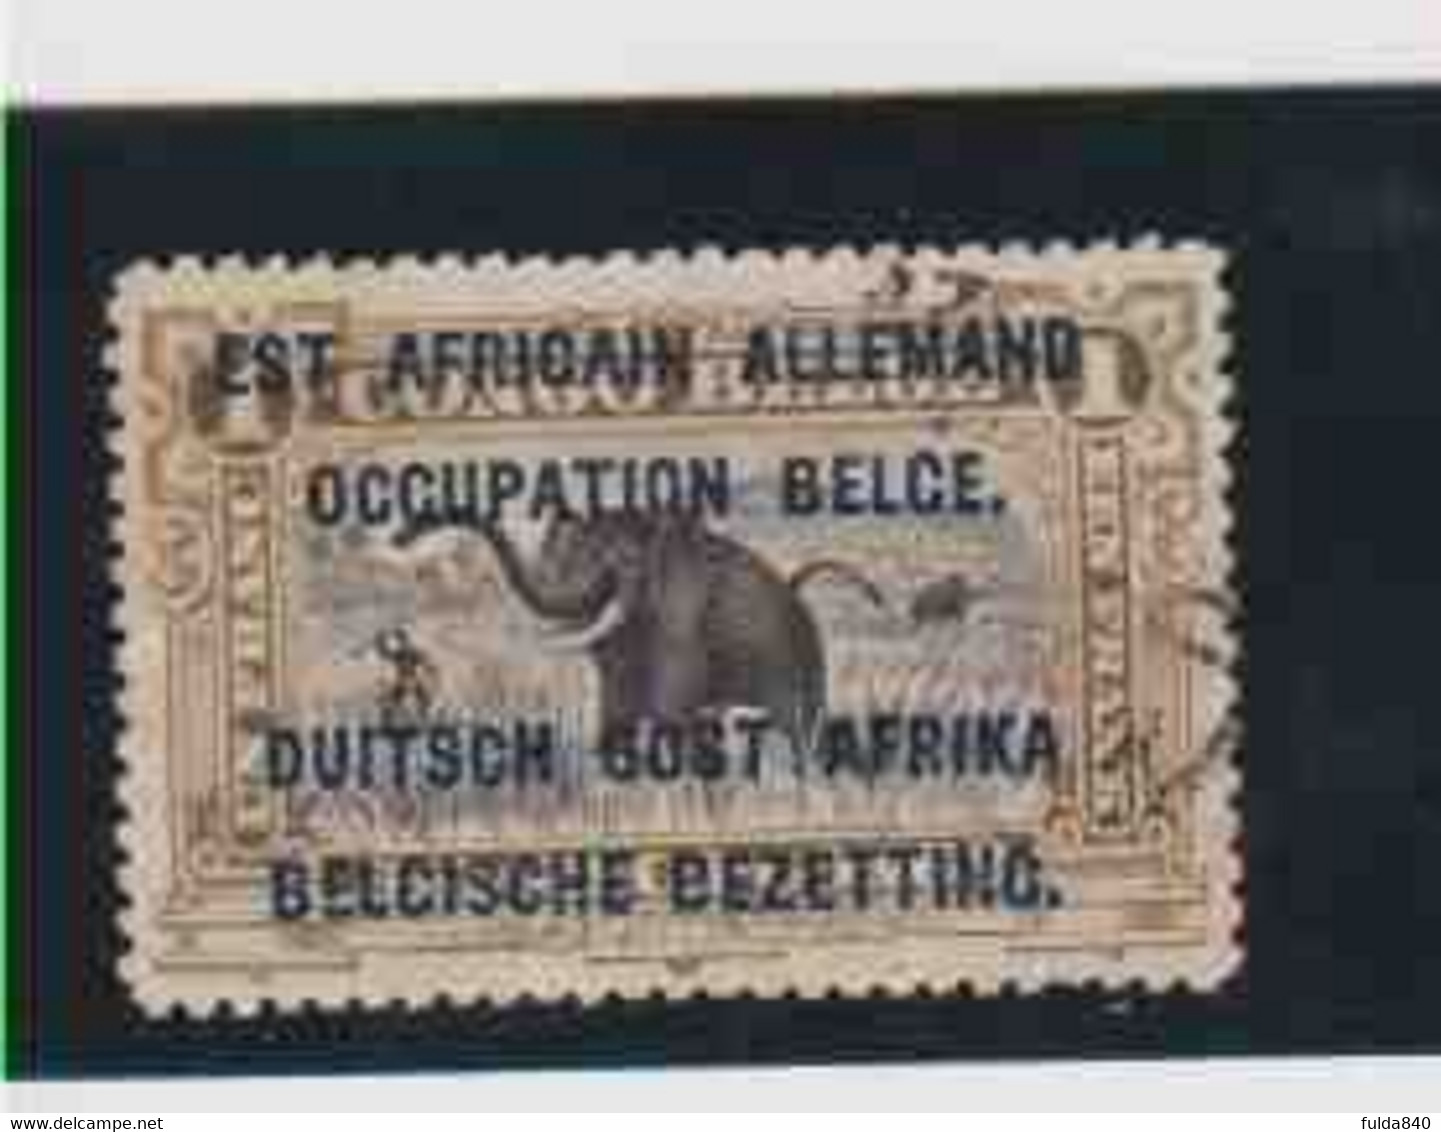 RUANDA-URUNDI. (OBP-COB) 1916 - N°34  *Est Africain Allemand, Occupation Belge*   1F.  Obli  () - Usati